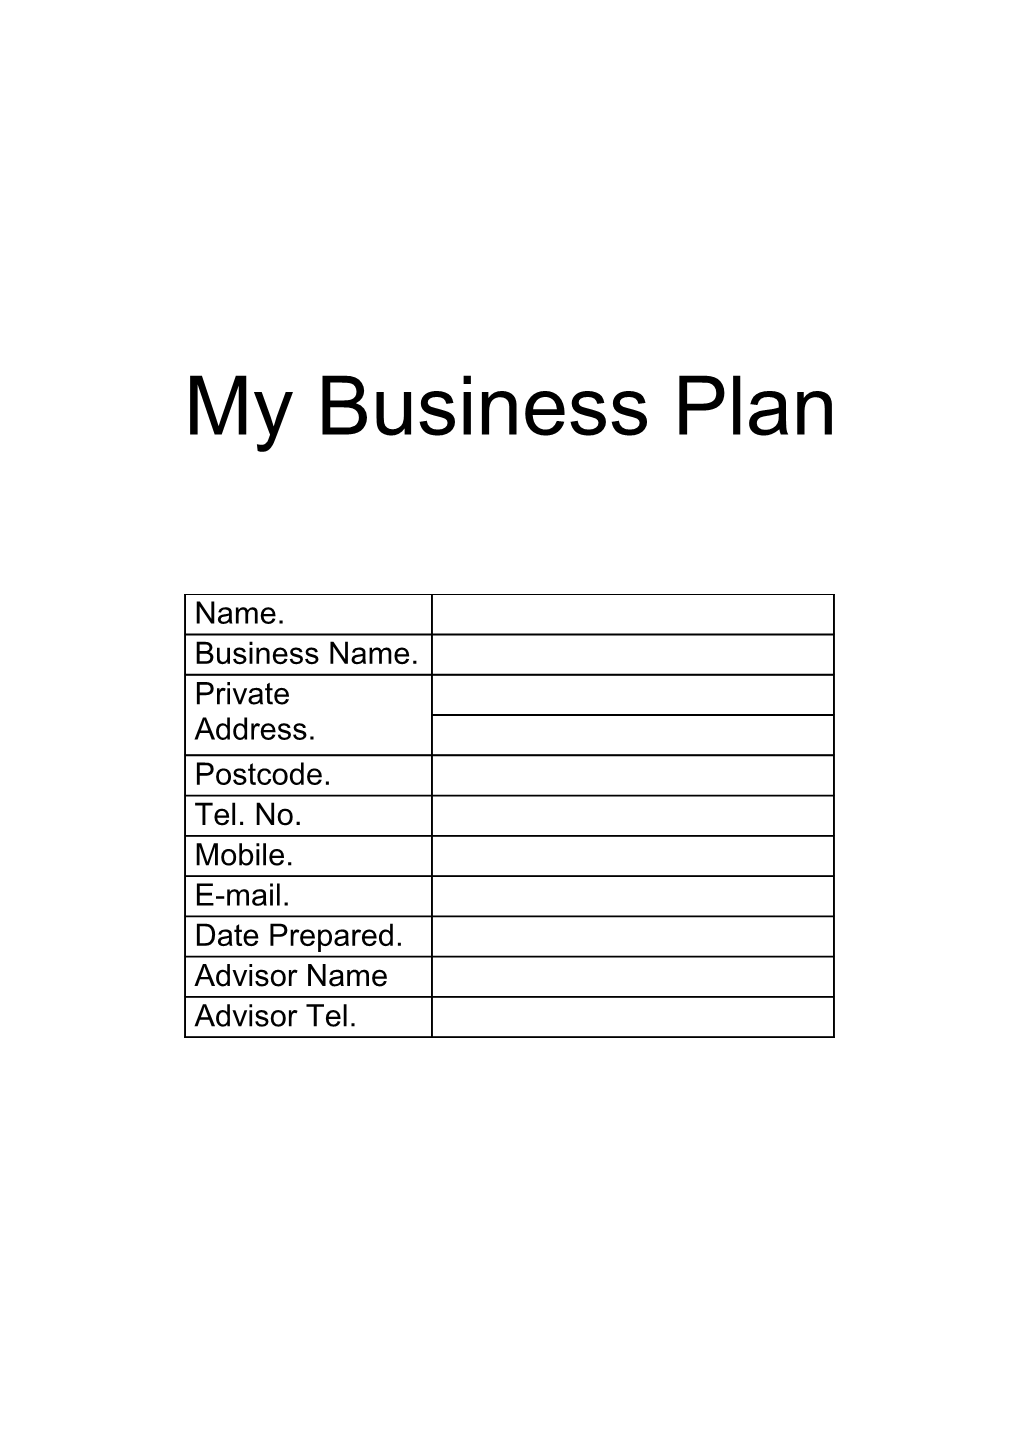 My Business Plan